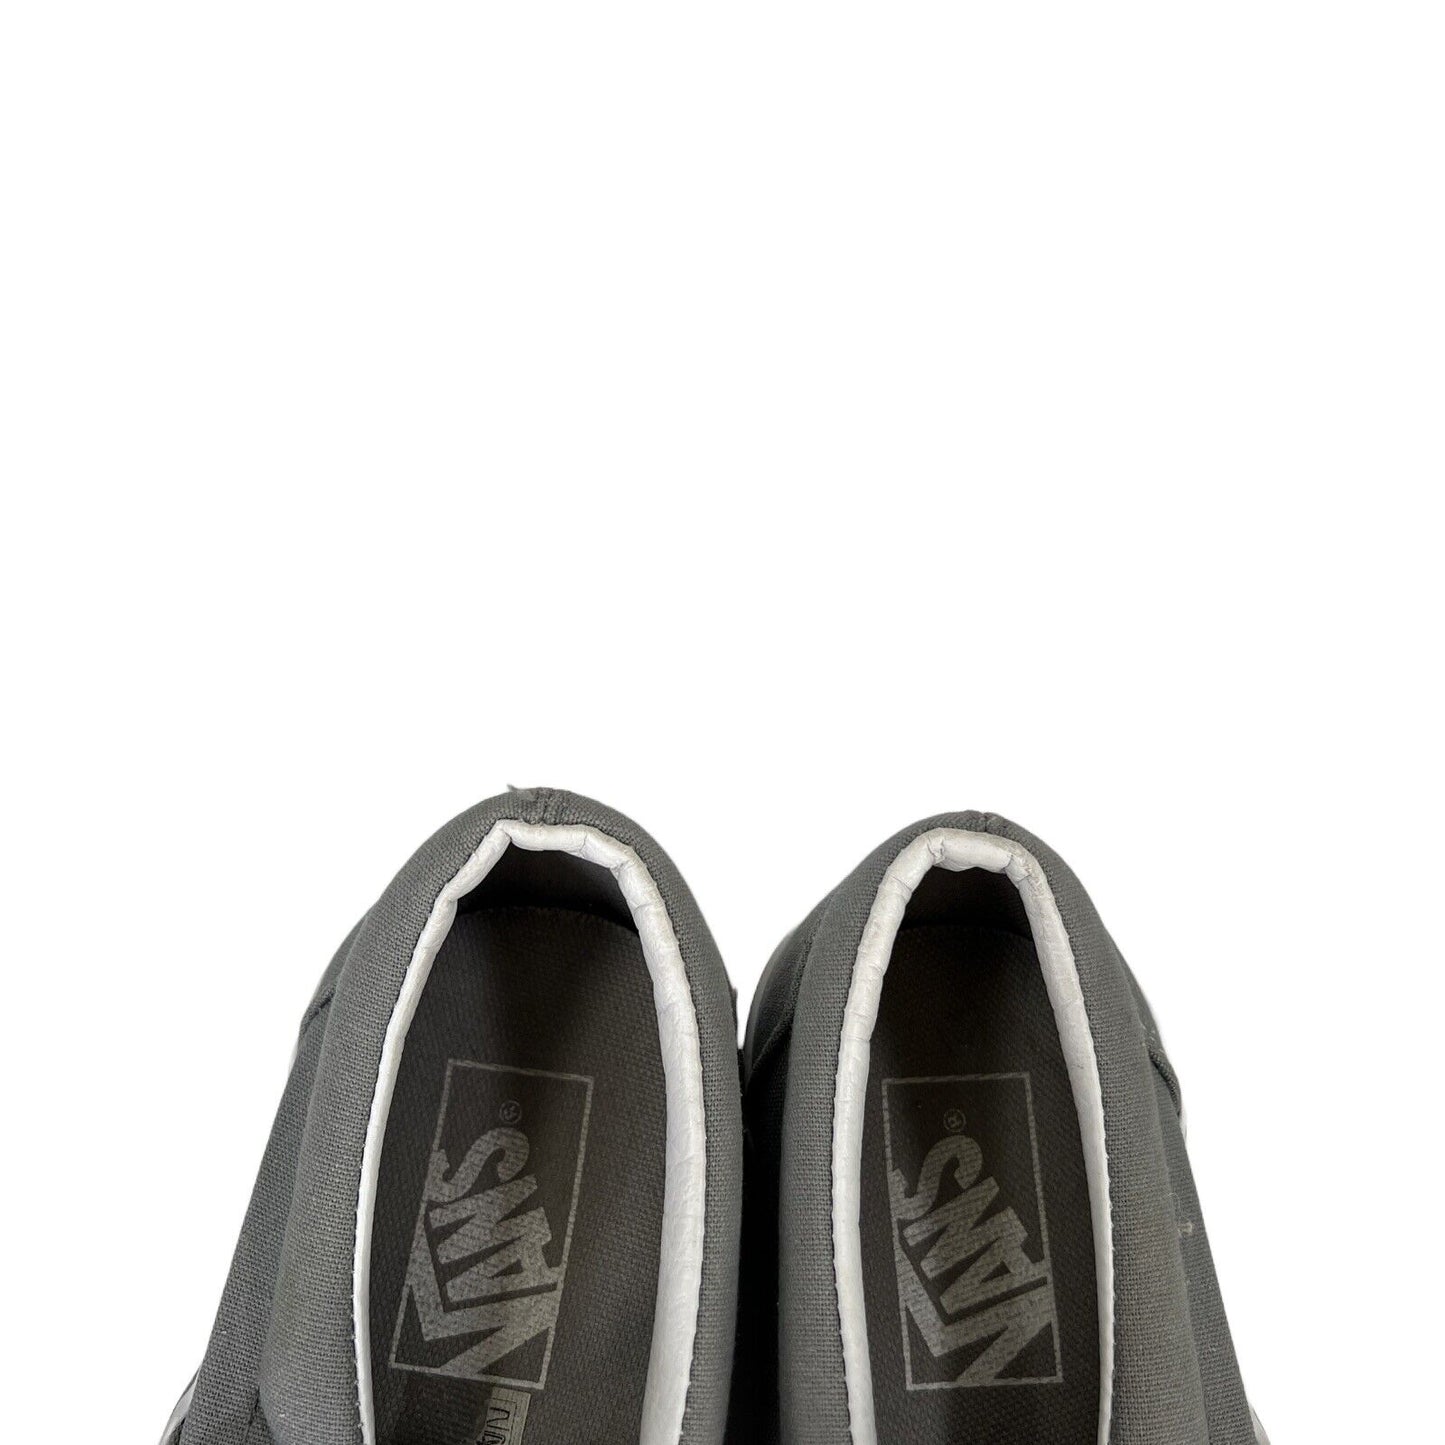 Vans Women's Gray Canvas Slip On Casual Skate Sneakers - 7